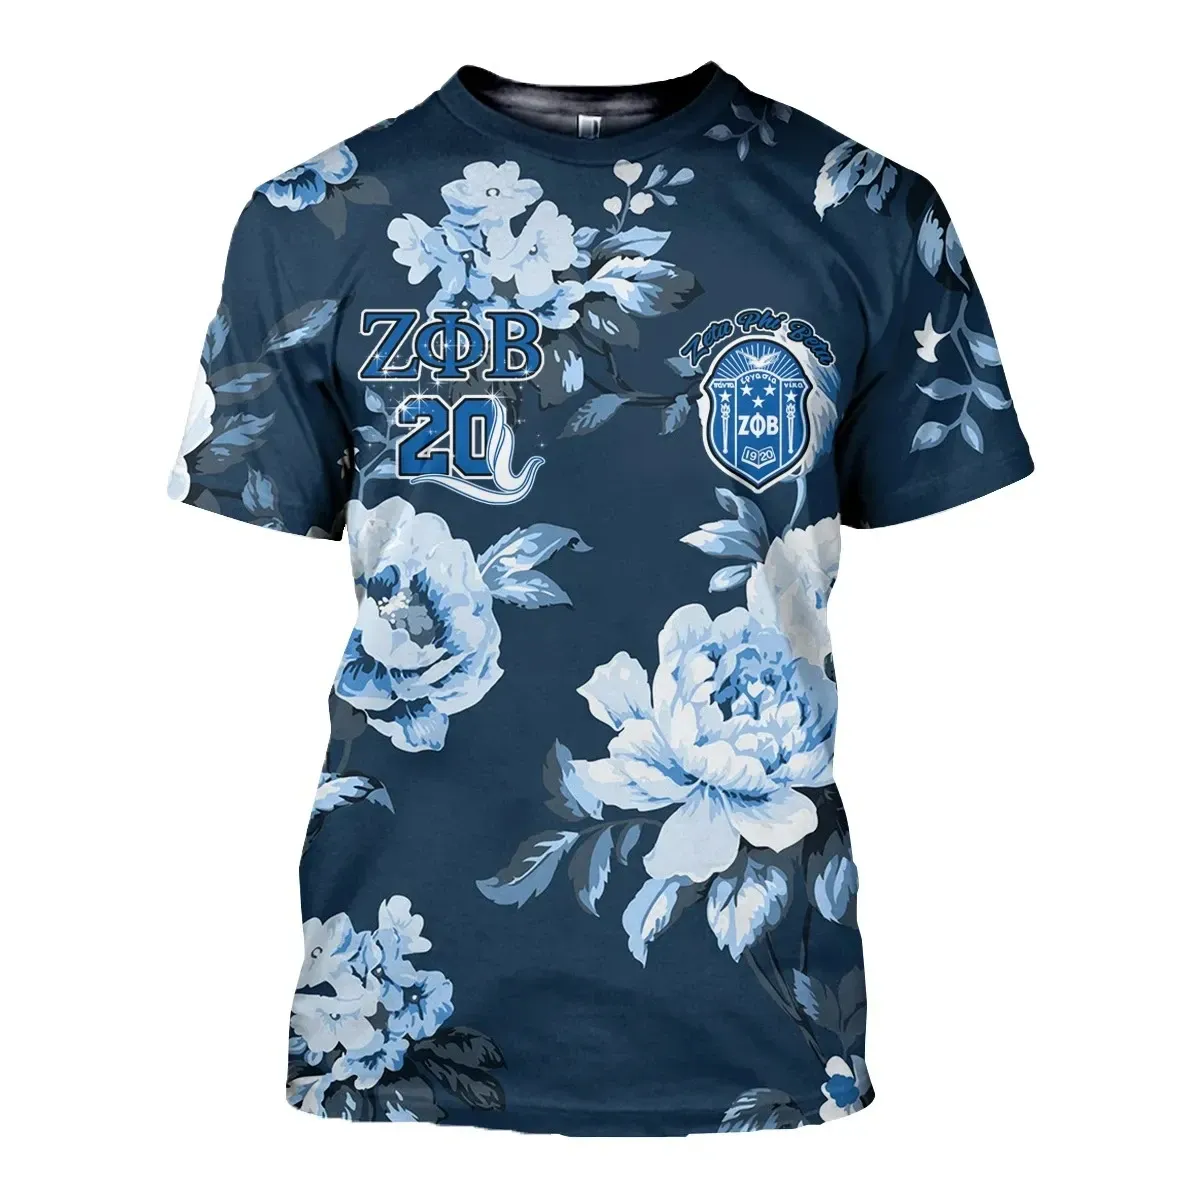 T-shirt – Zeta Phi Beta Blue Rose Girl Tee